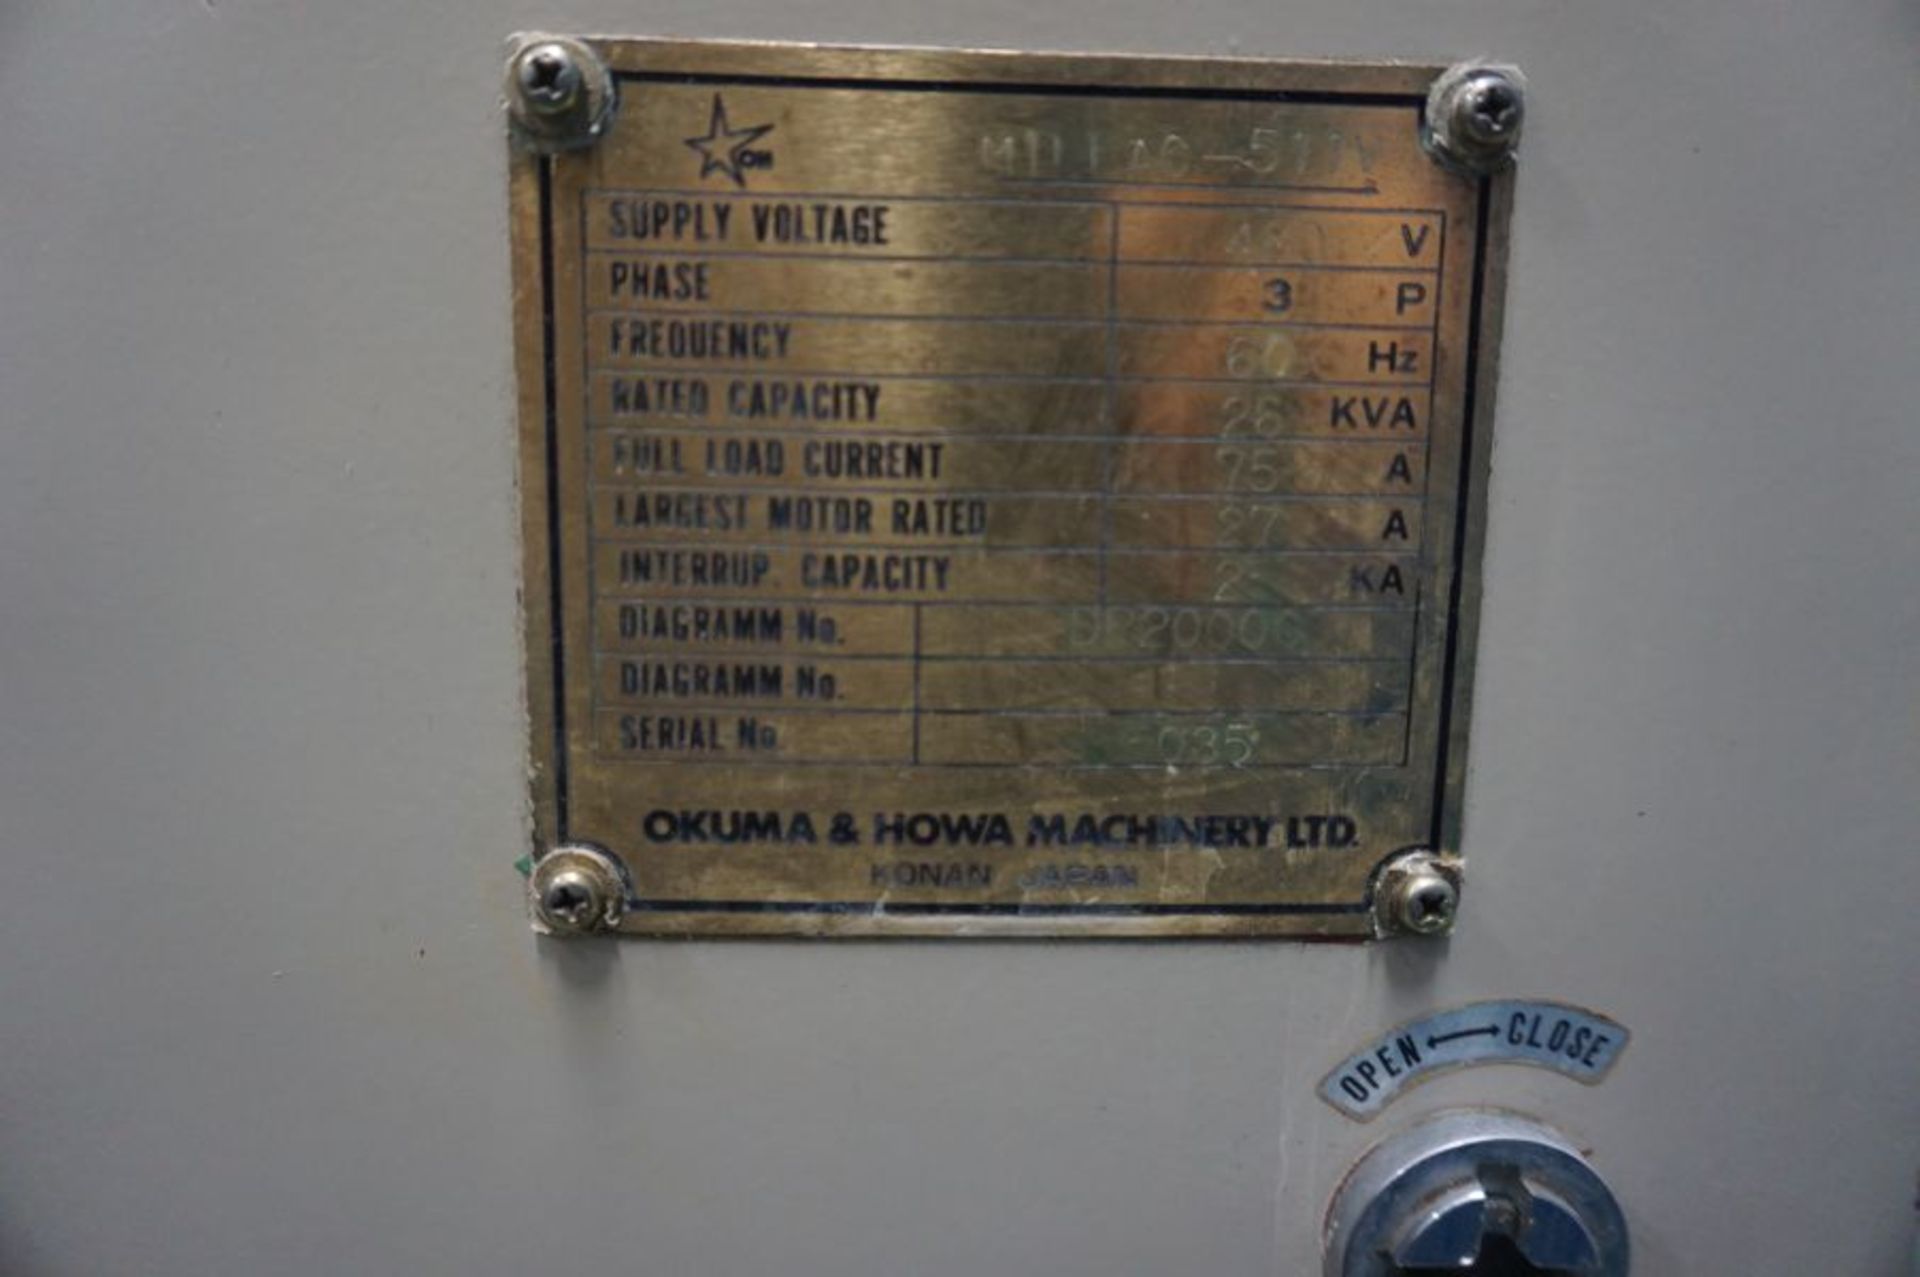 Okuma & Howa Millac 511V, FANUC 18-M Control, 50" x 20" Table, Cat 50, 30 ATC, 6000 RPM ***Rotary - Image 9 of 9